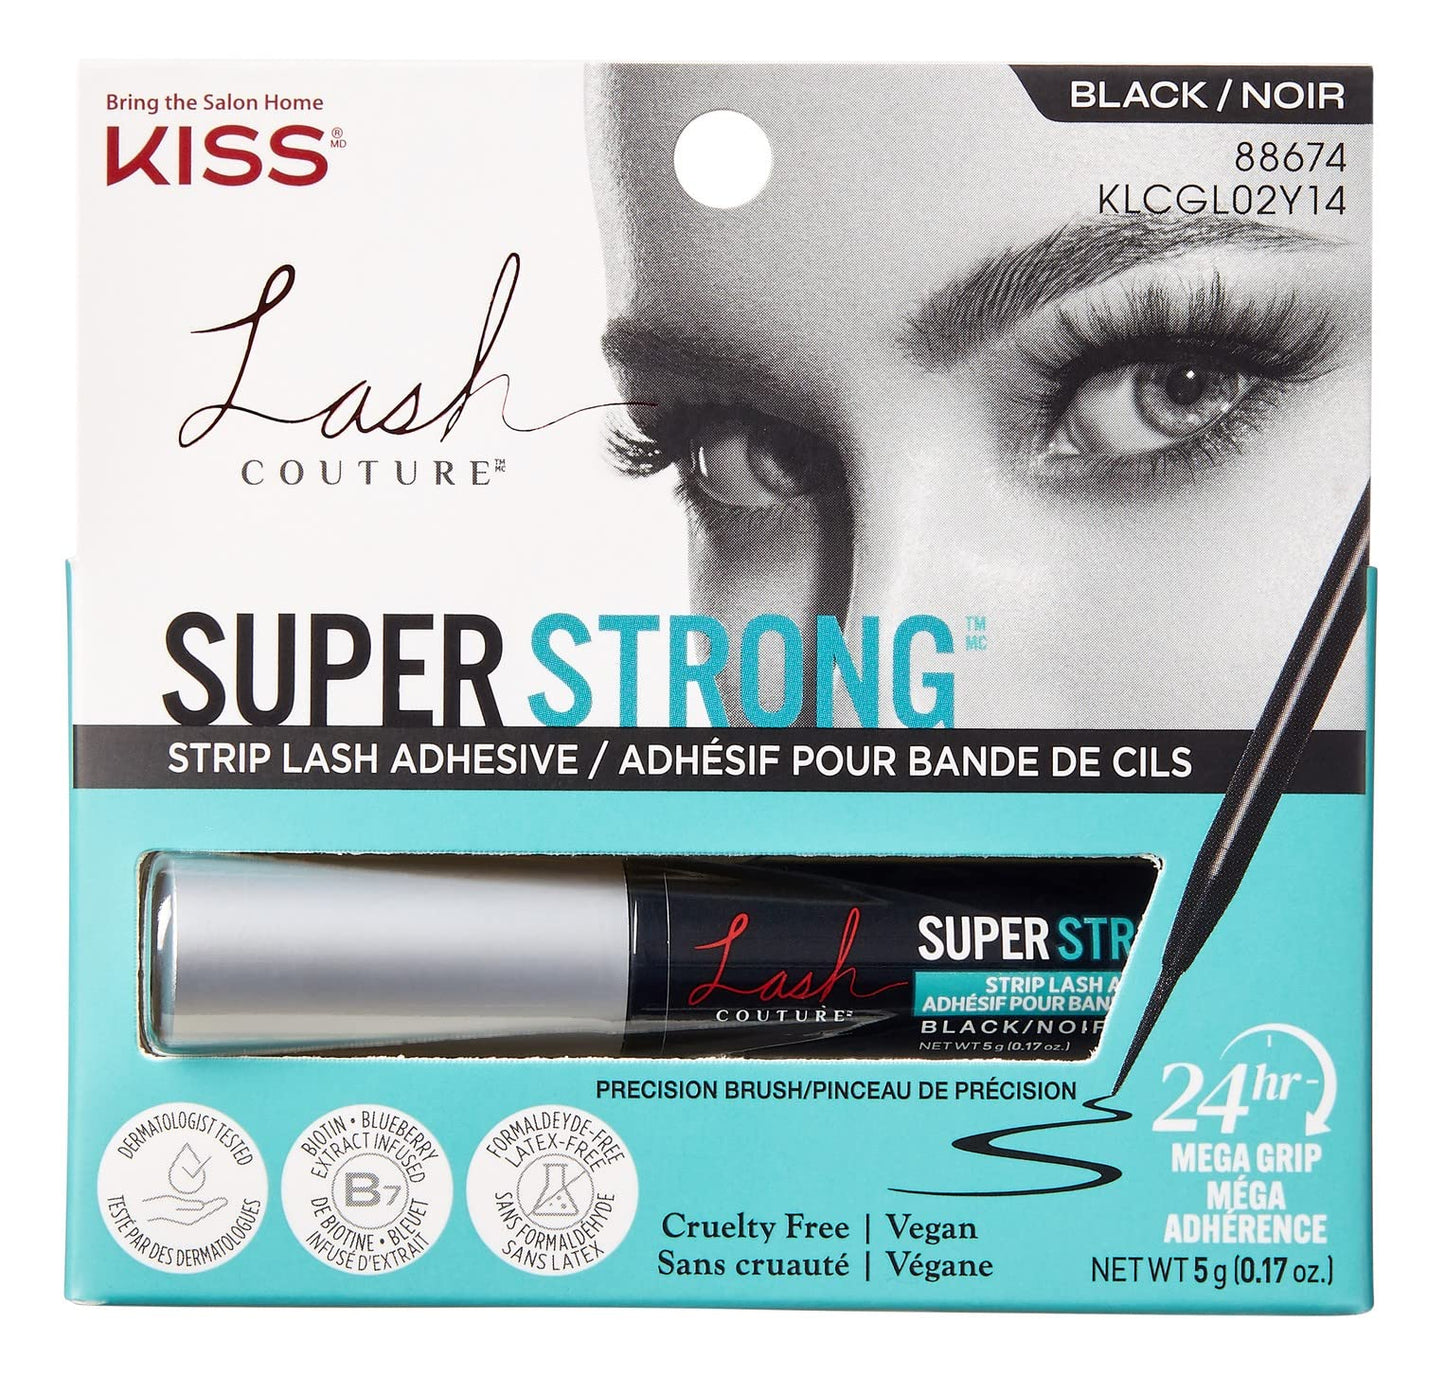 Kiss lash couture super strong glue